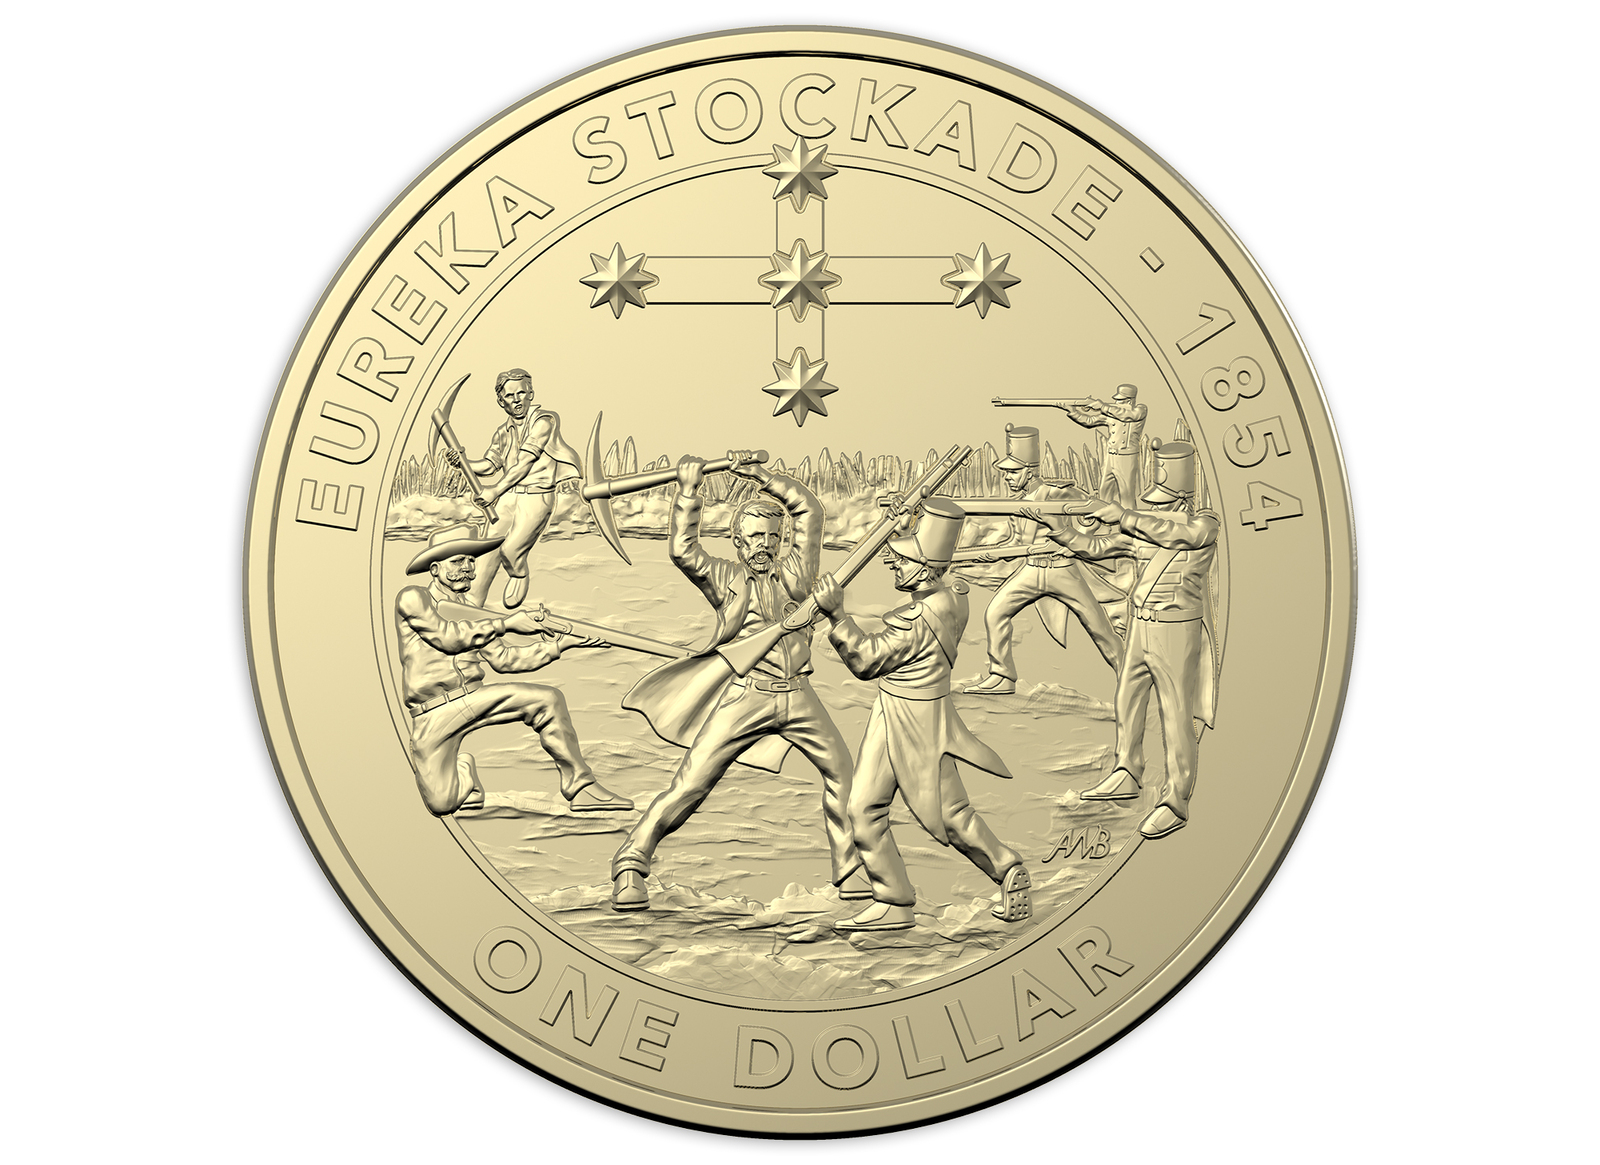 2019 $1 Eureka Stockade UNC Coin